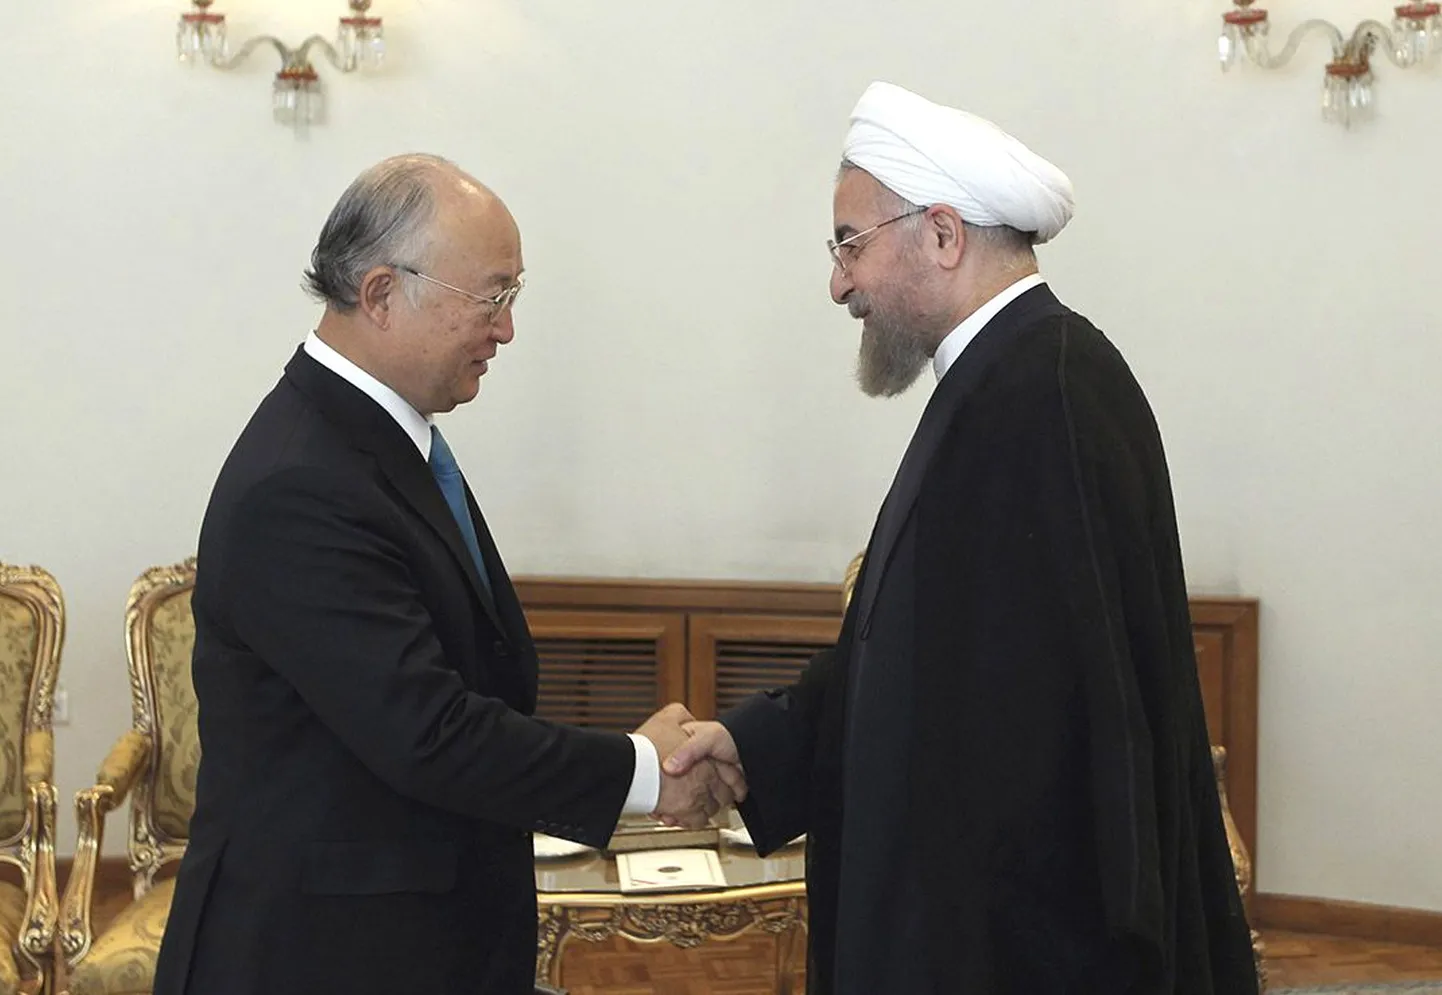 Rahvusvahelise Aatomienergiaagentuuri (IAEA) juht Yukiya Amano kohtus täna Iraani presidendi Hassan Rouhaniga.